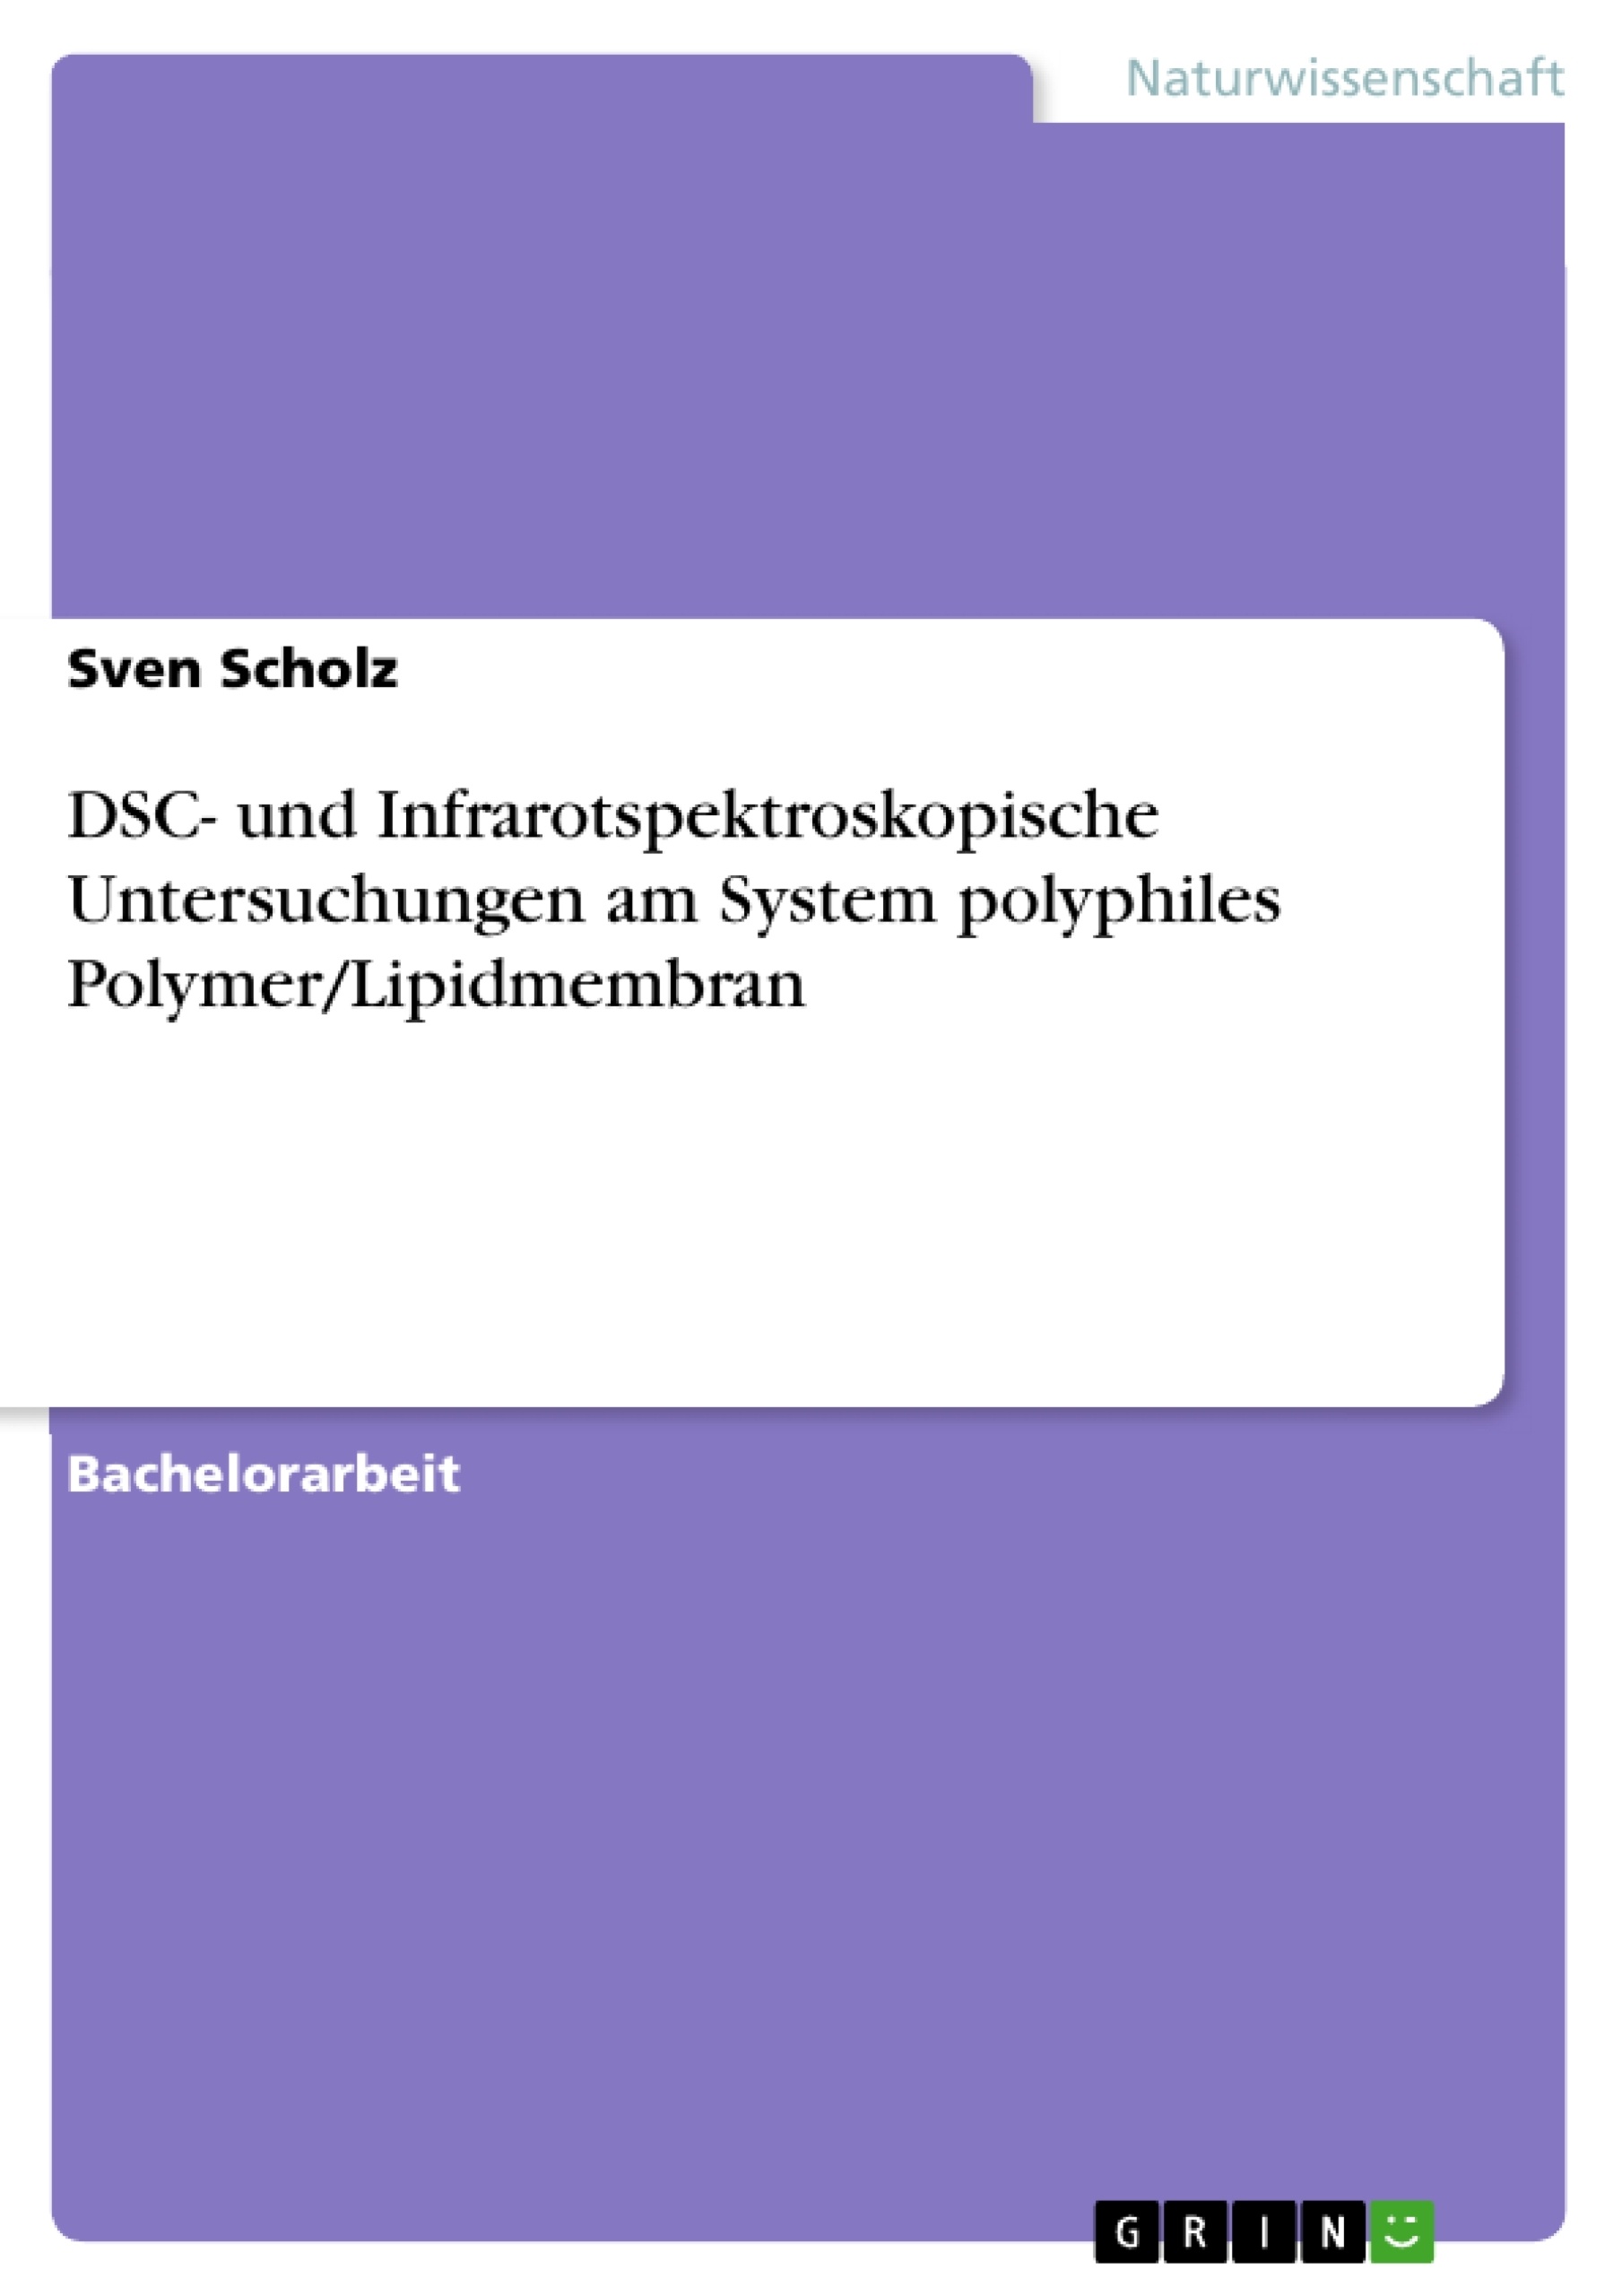 Title: DSC- und Infrarotspektroskopische Untersuchungen am System polyphiles Polymer/Lipidmembran